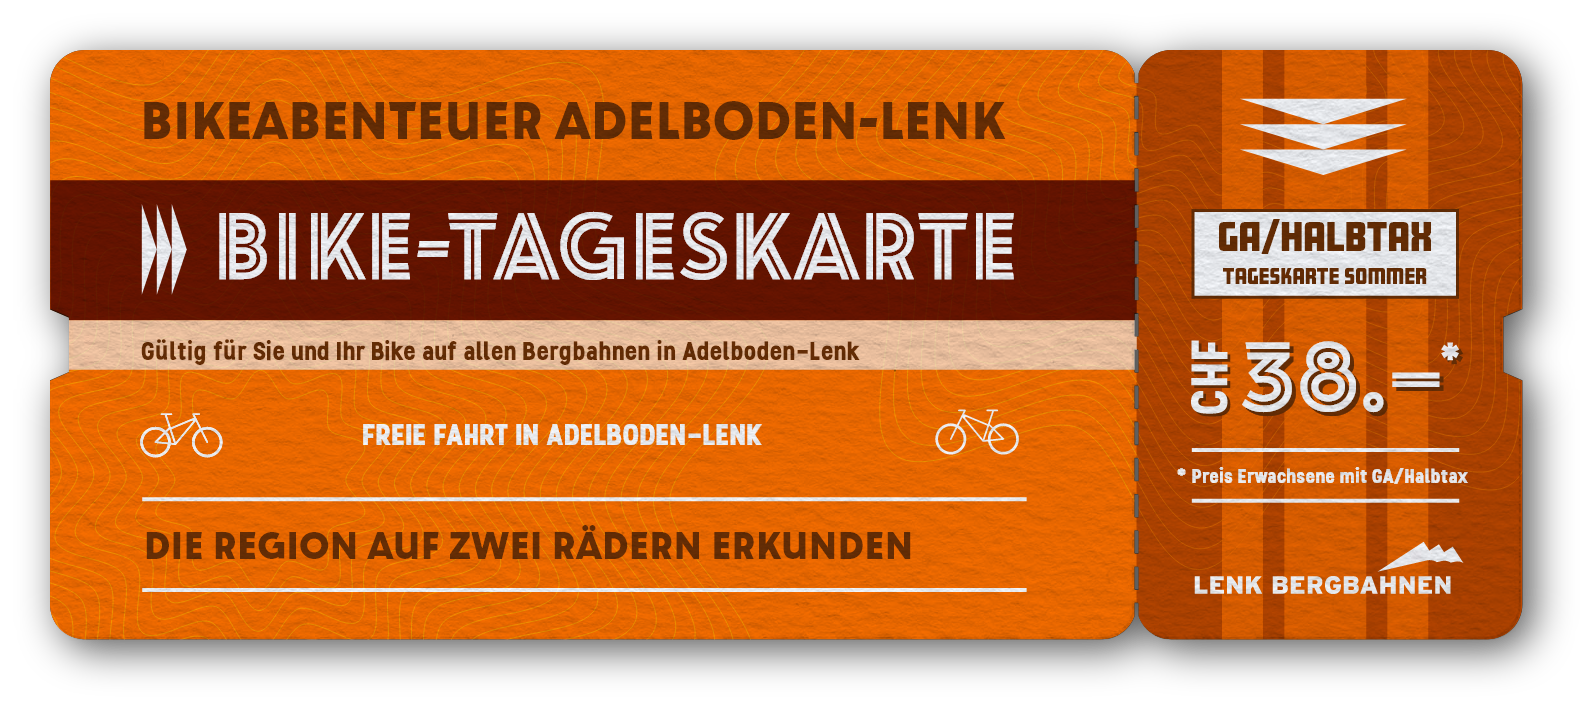 Biketageskarte Adelboden-Lenk